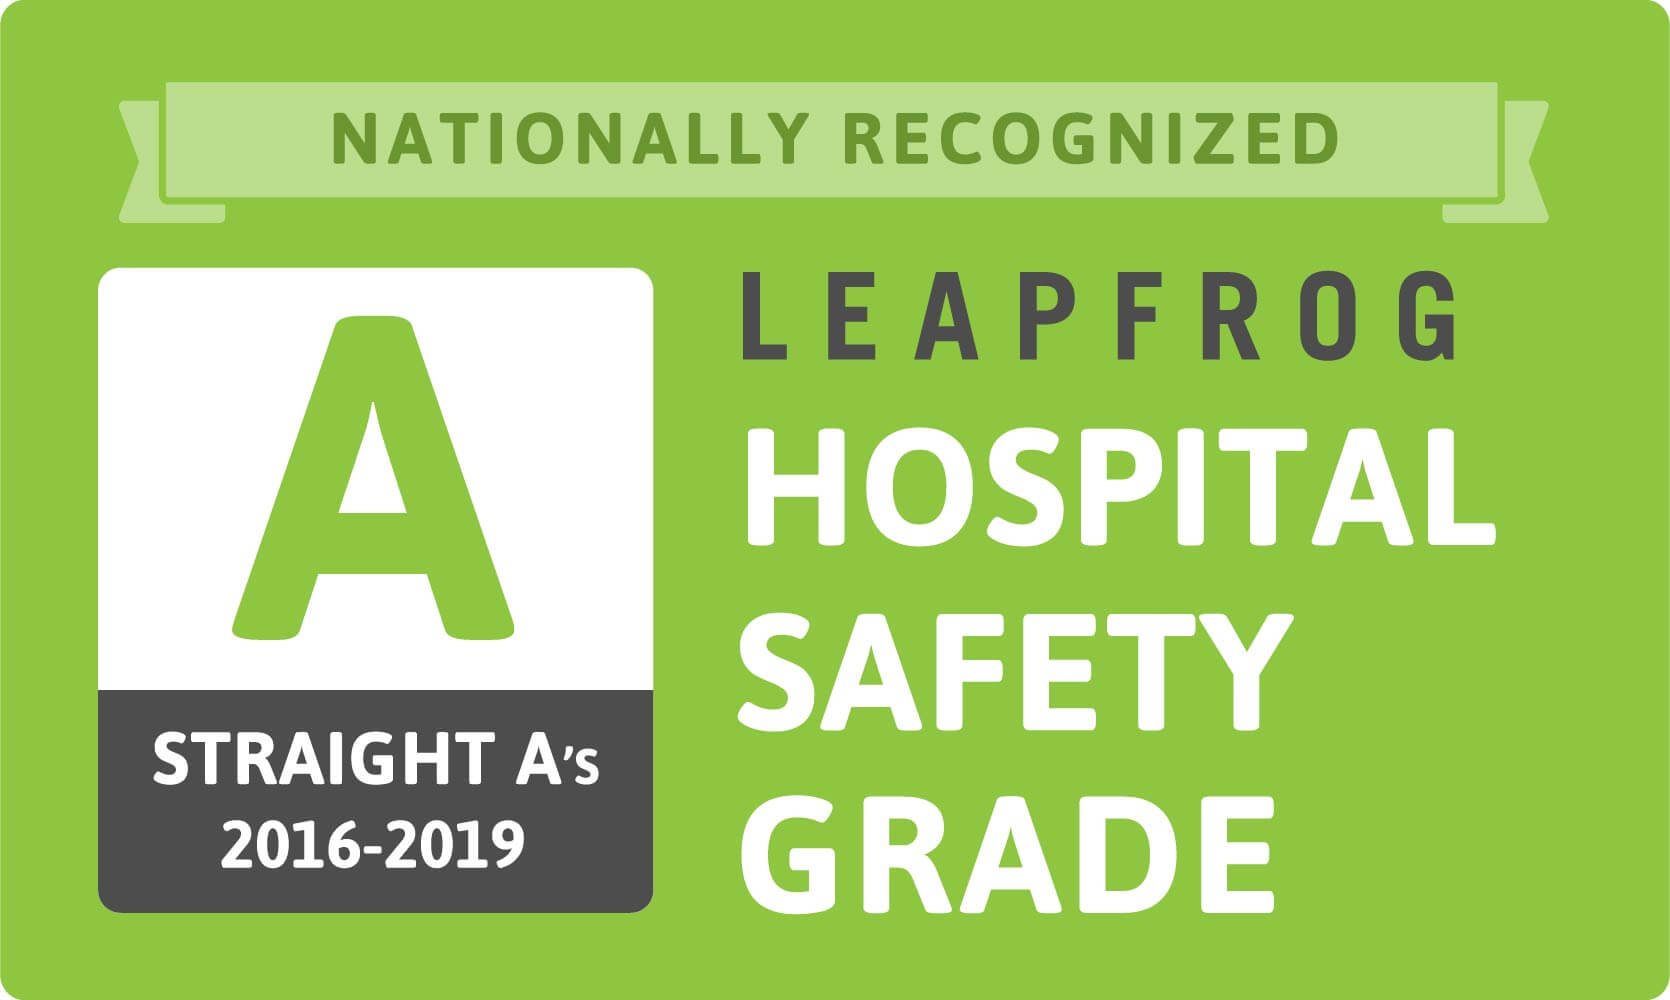 LeapFrog Hospital Safety Grade Logo